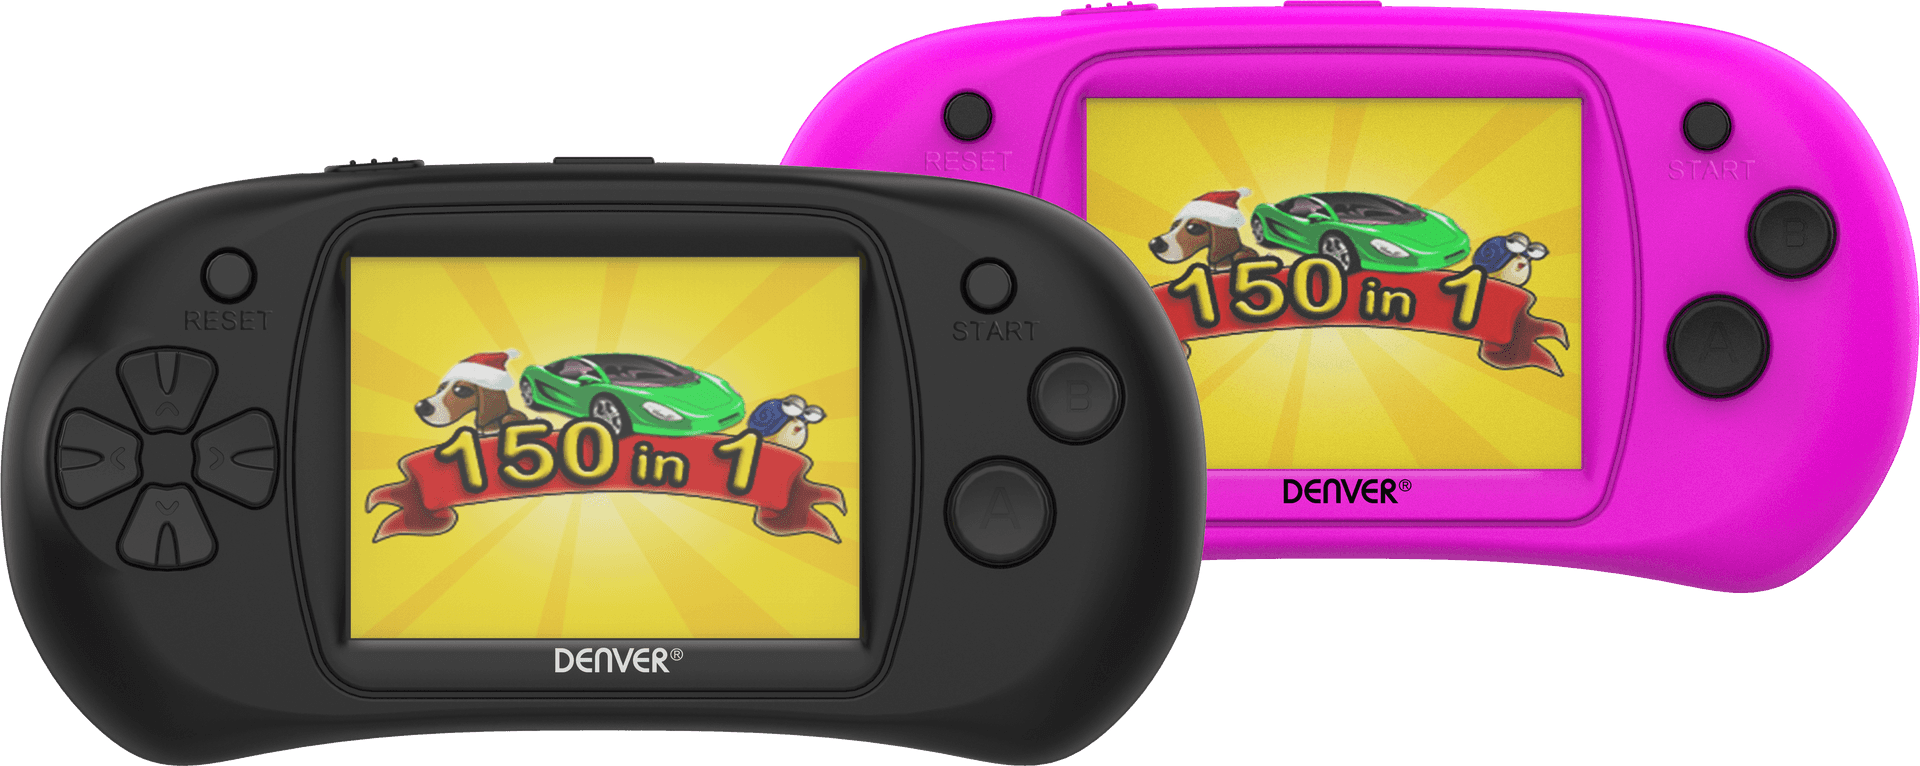 Denver Portable Gaming Consoles Black Pink PNG image